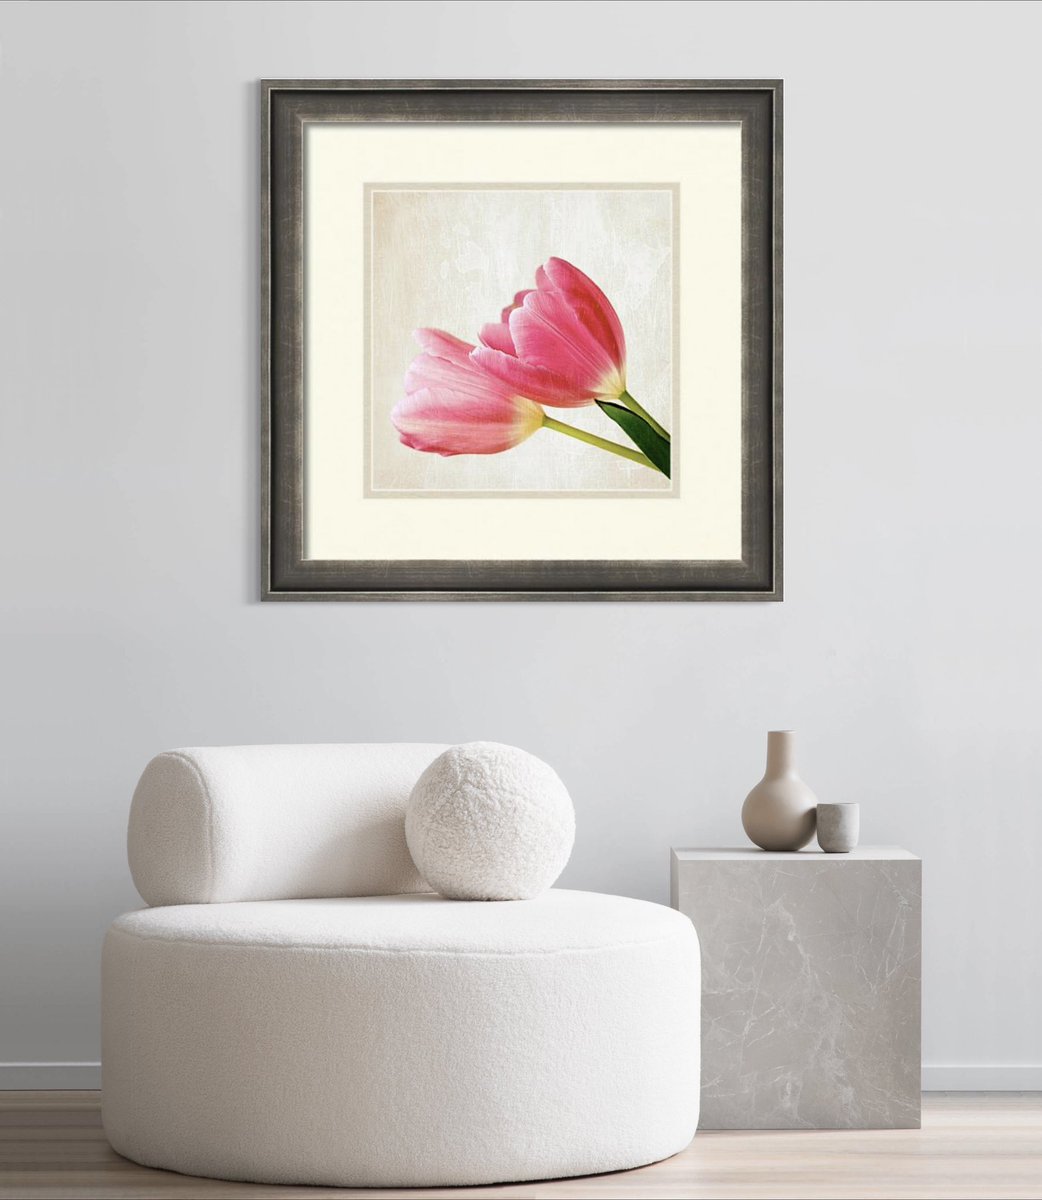 Romantic Tulips 🌷 Purchase #wallart and more HERE: 5-tanya-smith.pixels.com/featured/roman… #WallArtDecor #wallartforsale #FillThatEmptyWall #tulips #flowers #PhotographyIsArt #BuyIntoArt #giftideas #prints #shopsmall #IndependentArtist #artprints